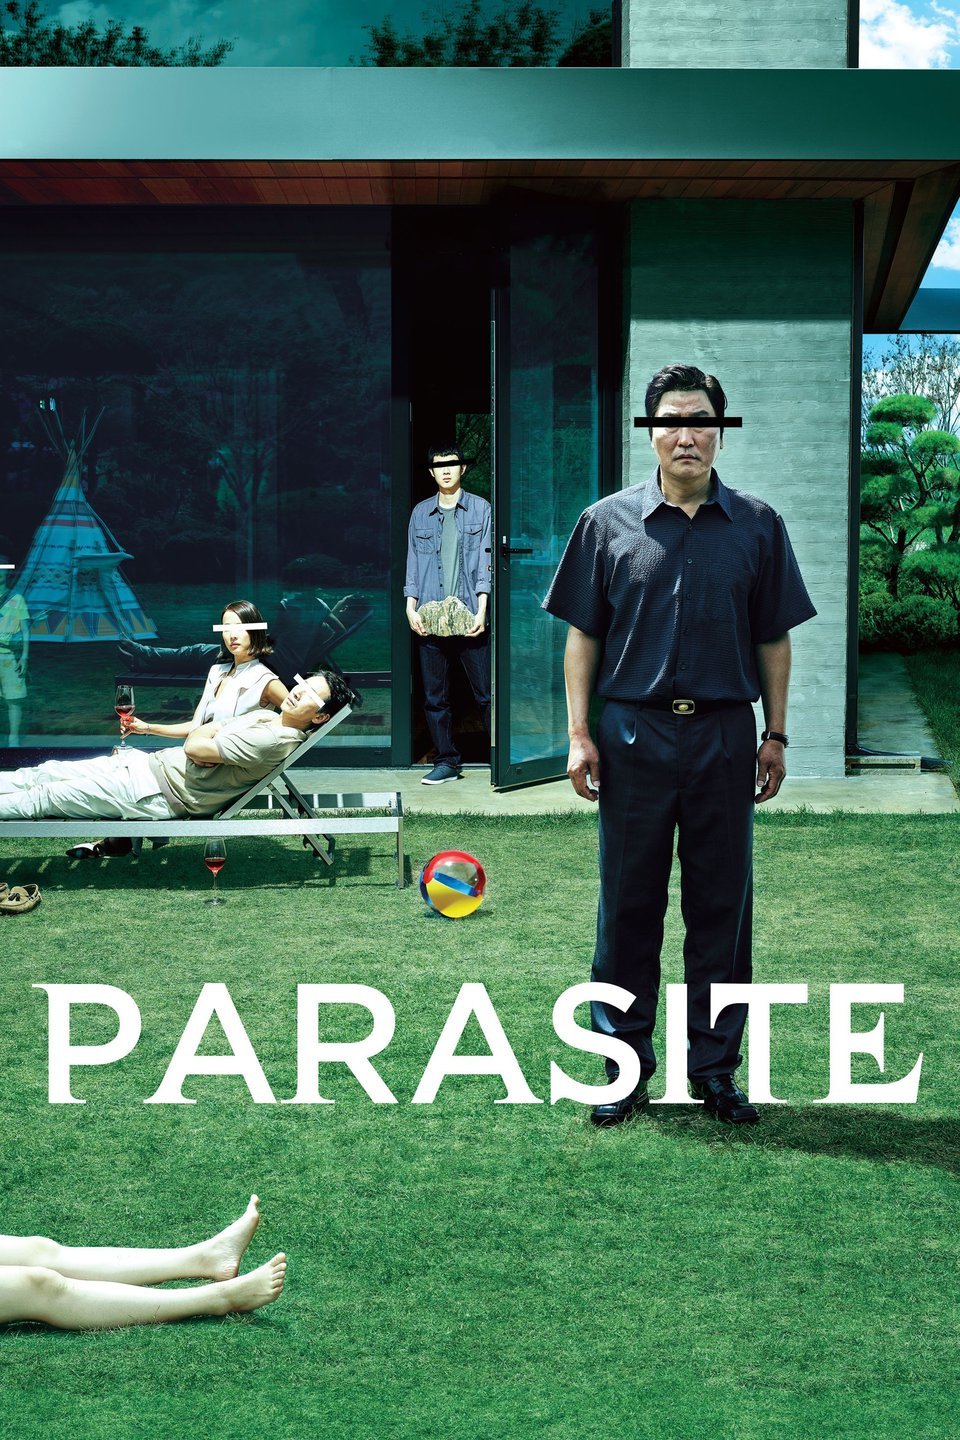 [MINI Super-HQ] Parasite (2019) ชนชั้นปรสิต [1080p] [พากย์ไทย 5.1 + เสียงเกาหลี DTS] [บรรยายไทย + อังกฤษ] [เสียงไทย + ซับไทย] [PANDAFILE]